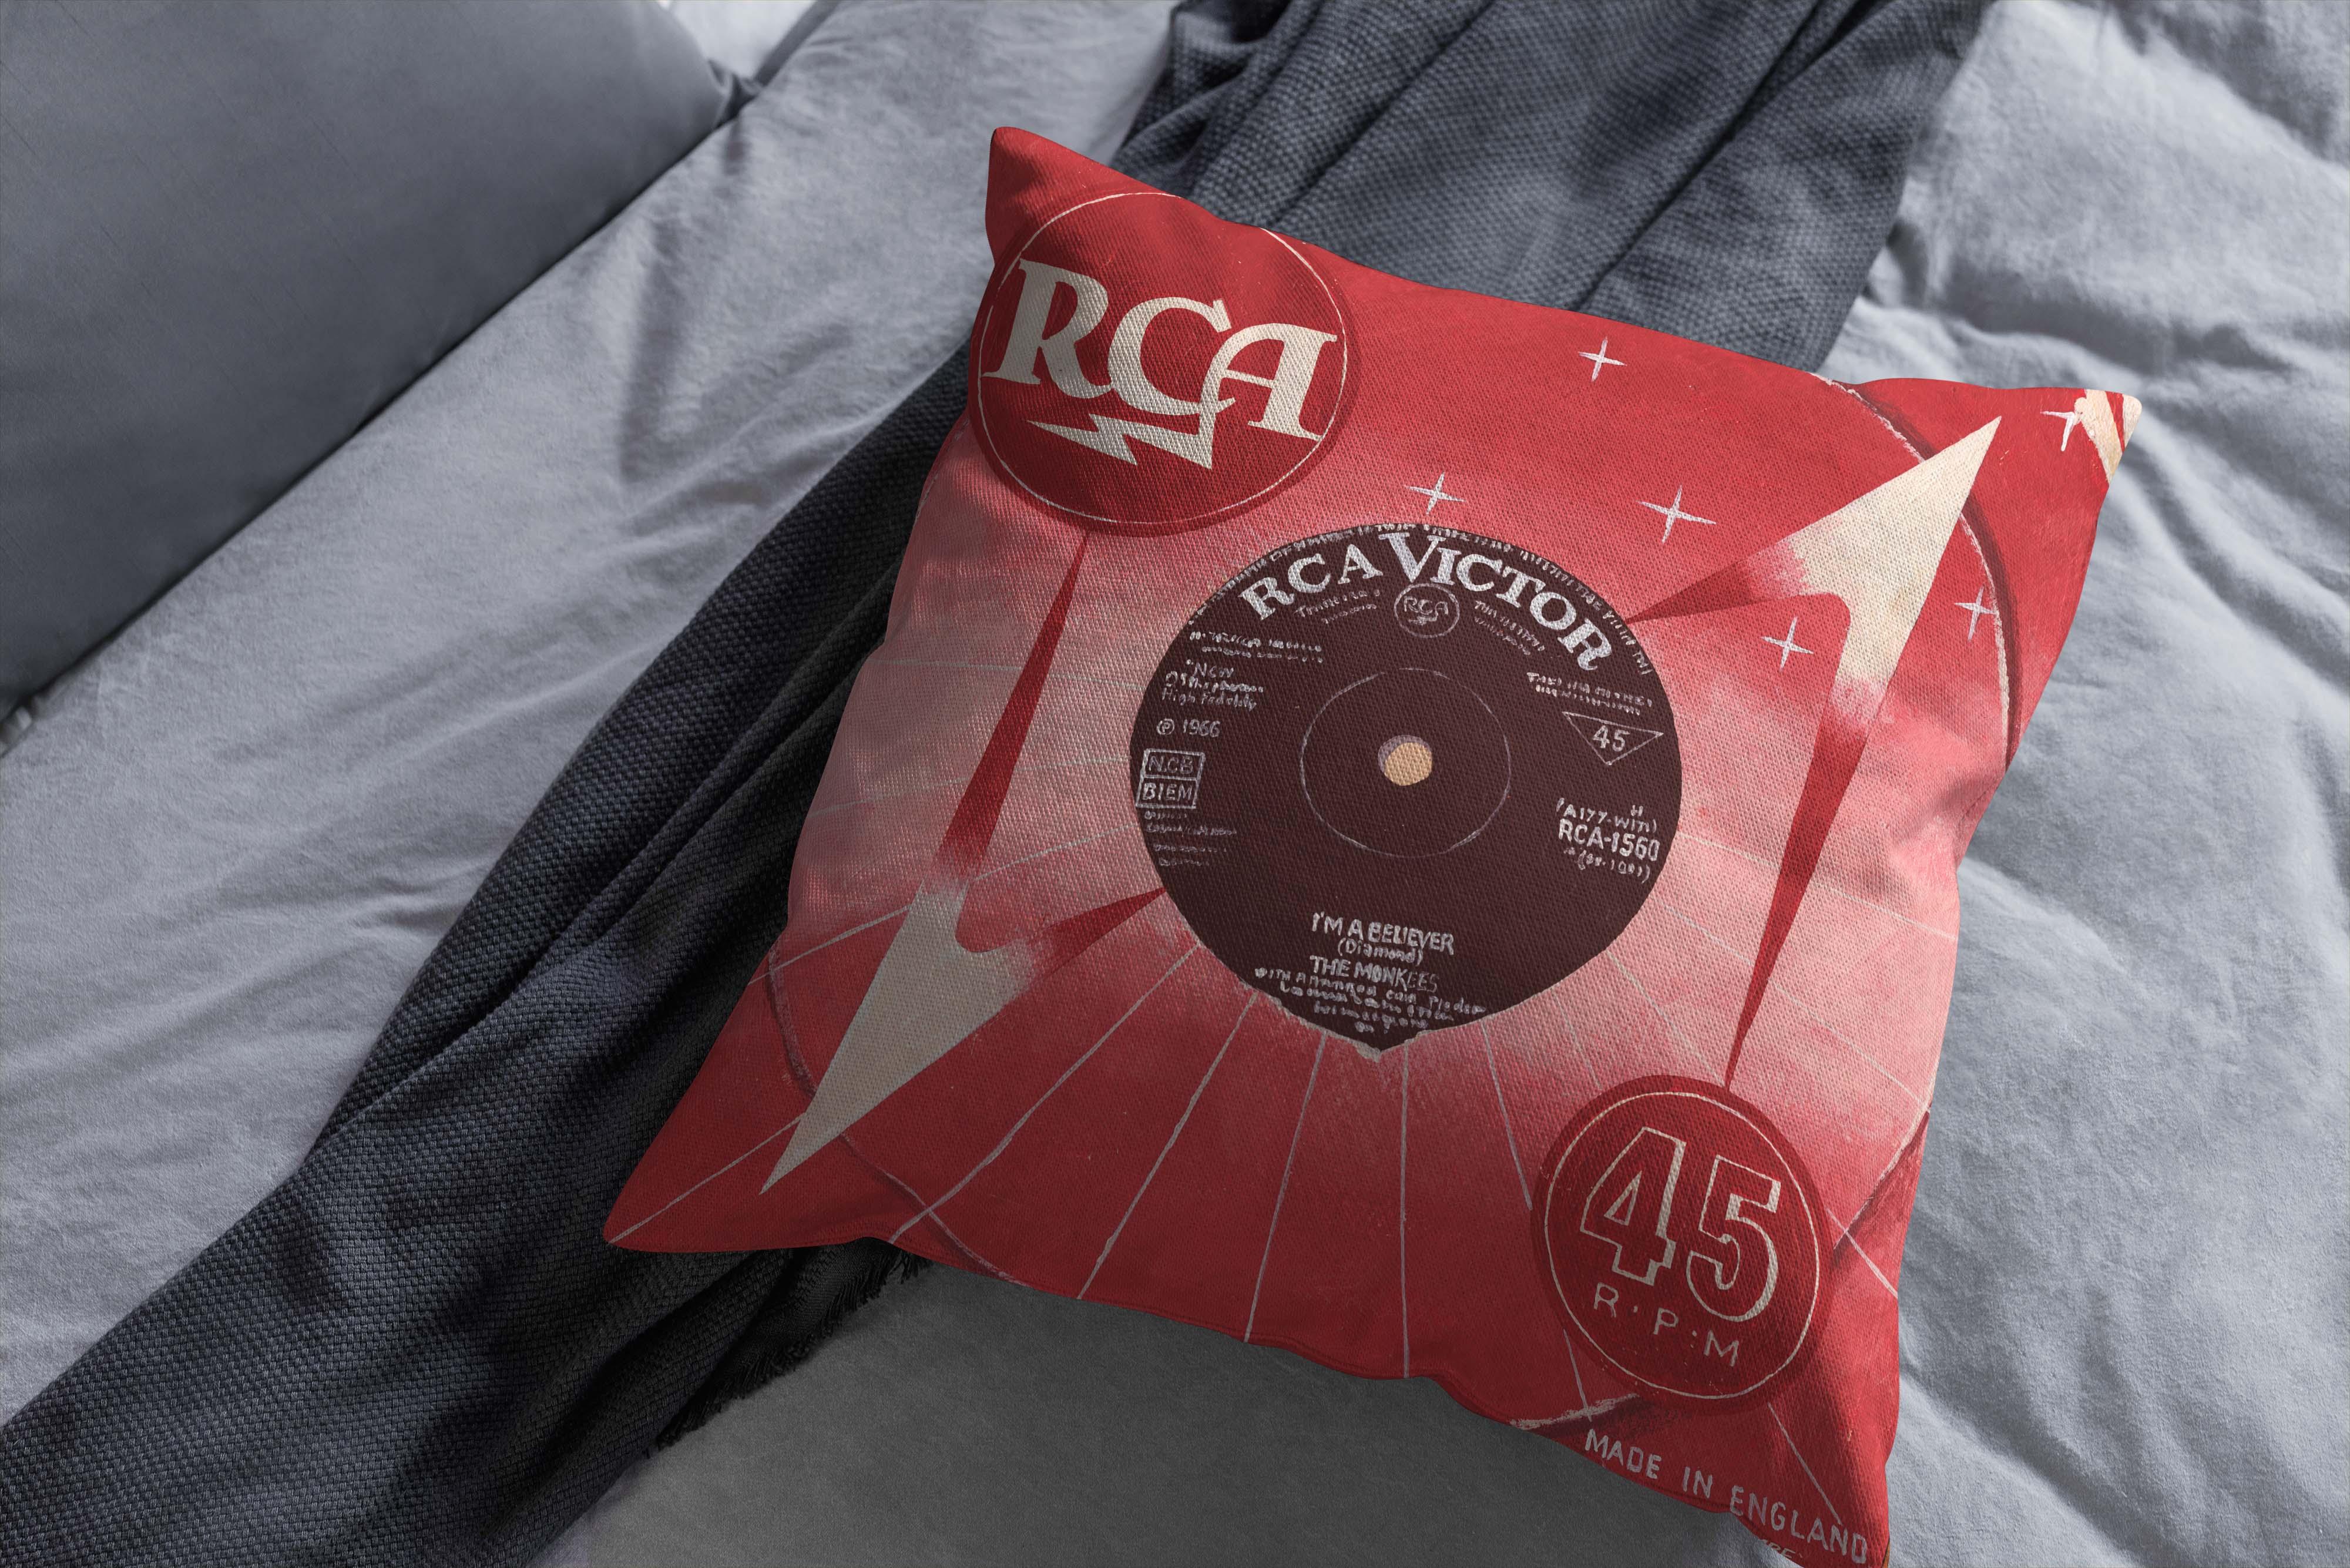 I'm A Believer RCA Cushion 45rpm - Martin Wiscombe - Classic Vinyl Cushion